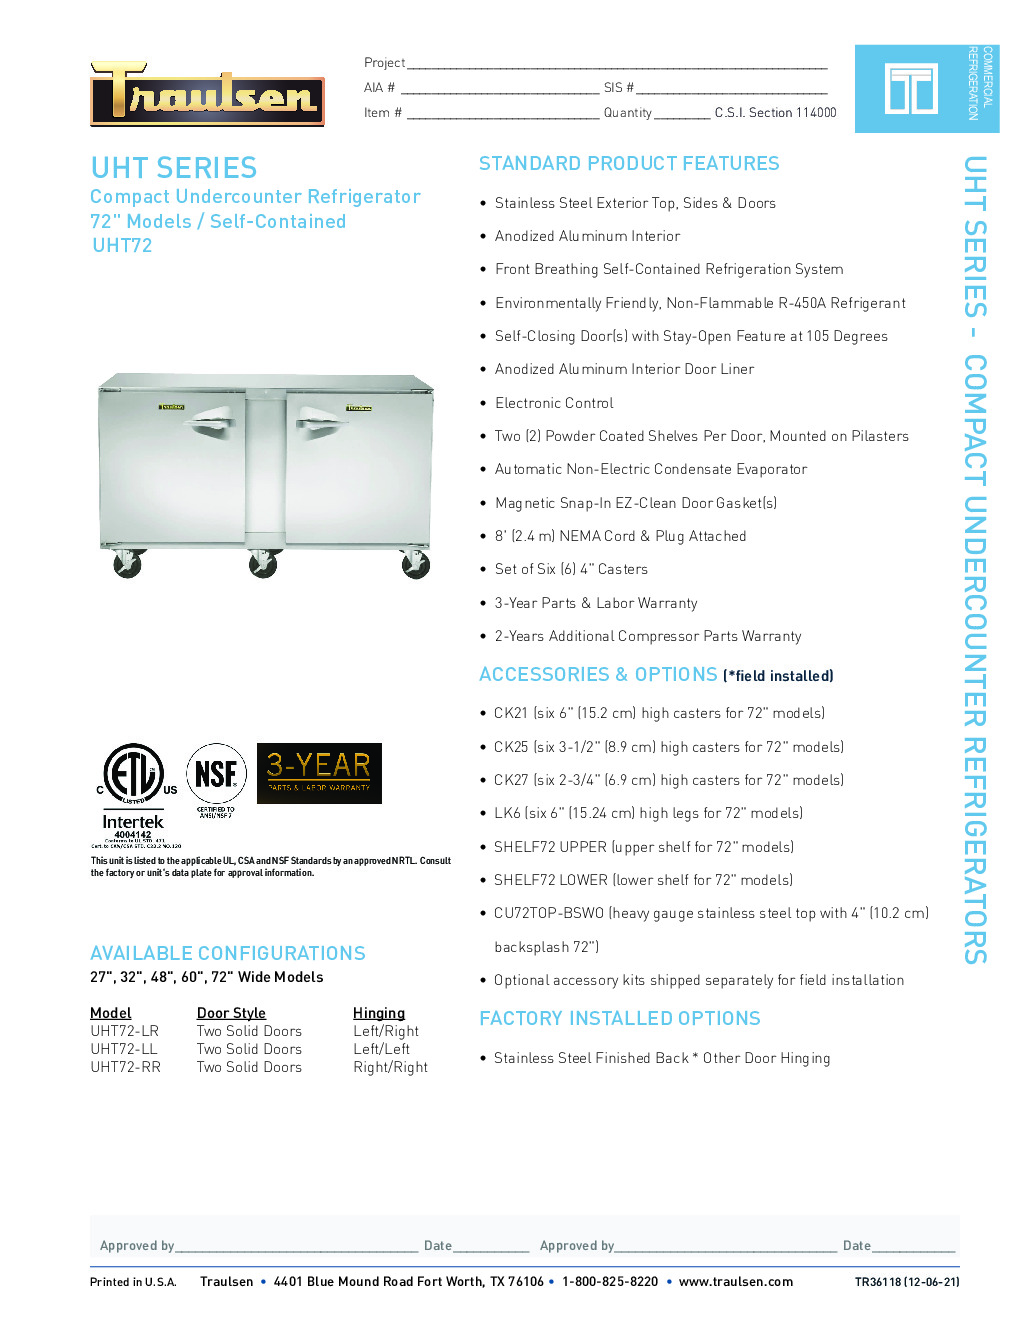 Traulsen UHT72-RR Reach-In Undercounter Refrigerator